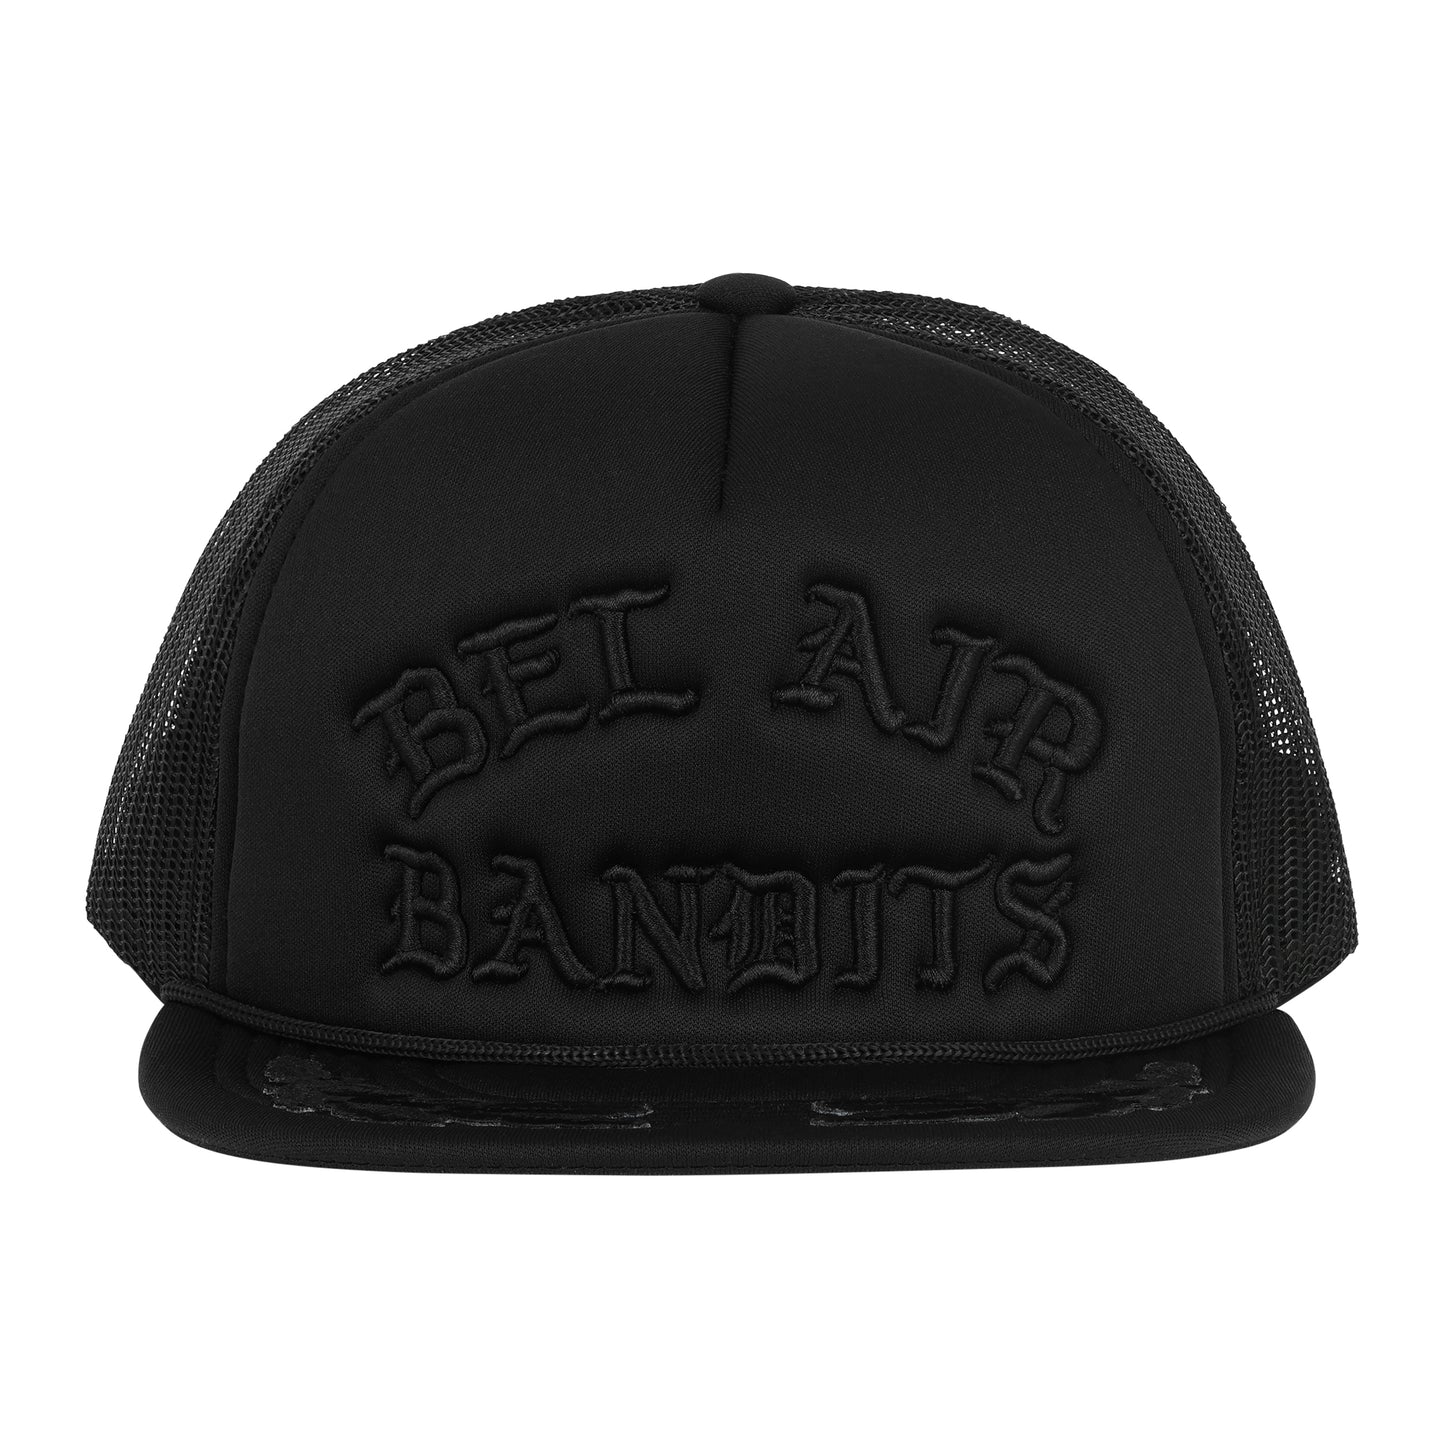 Bel Air Bandits Trucker Hat